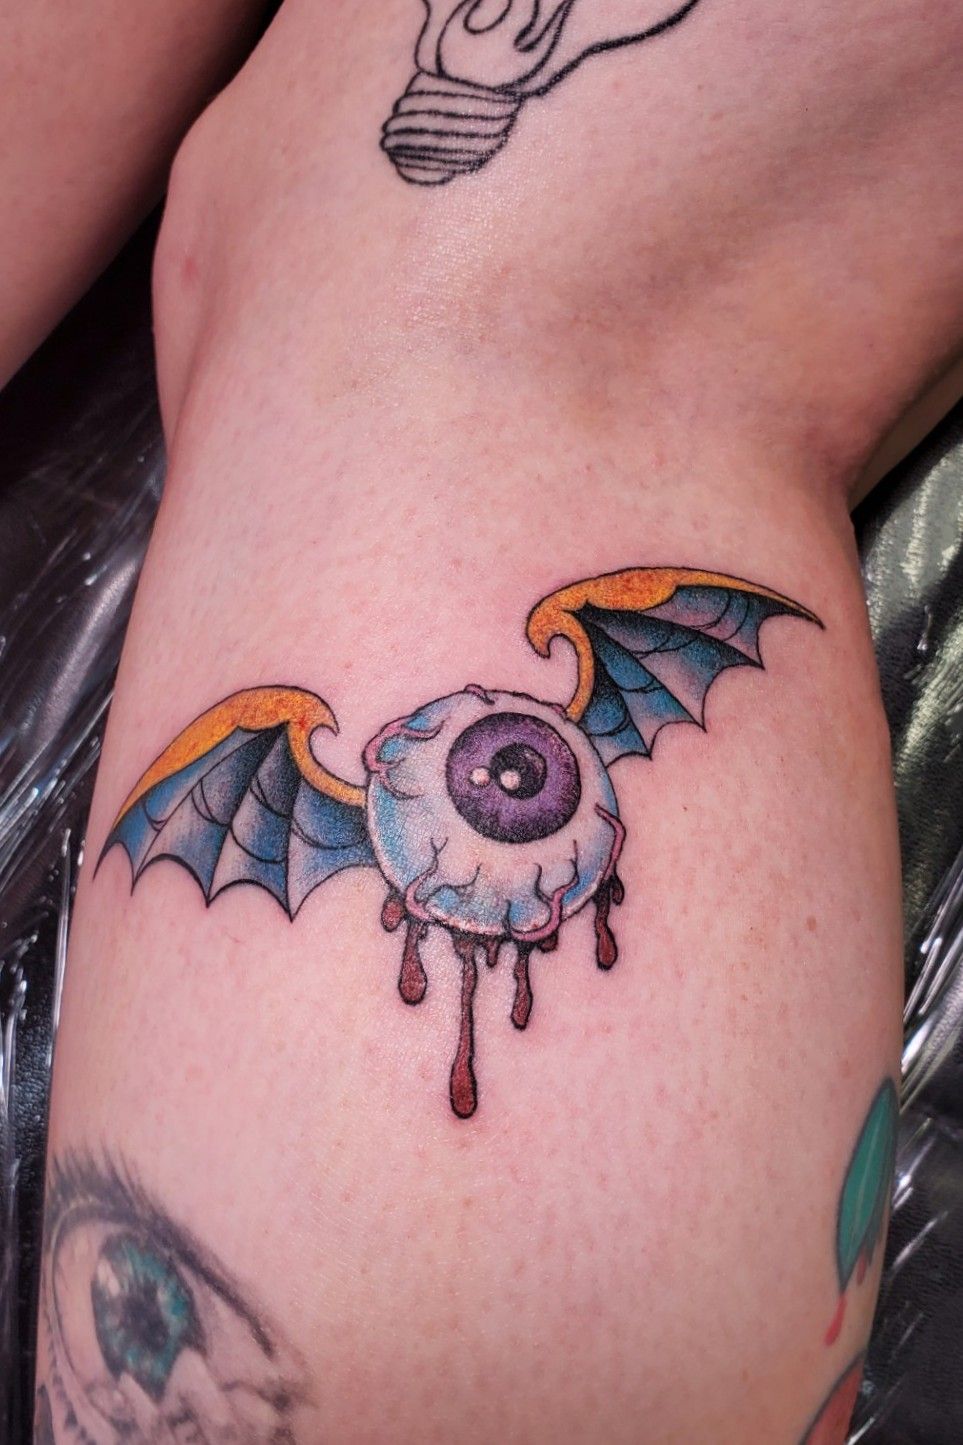 Triangle eye wings tattoo